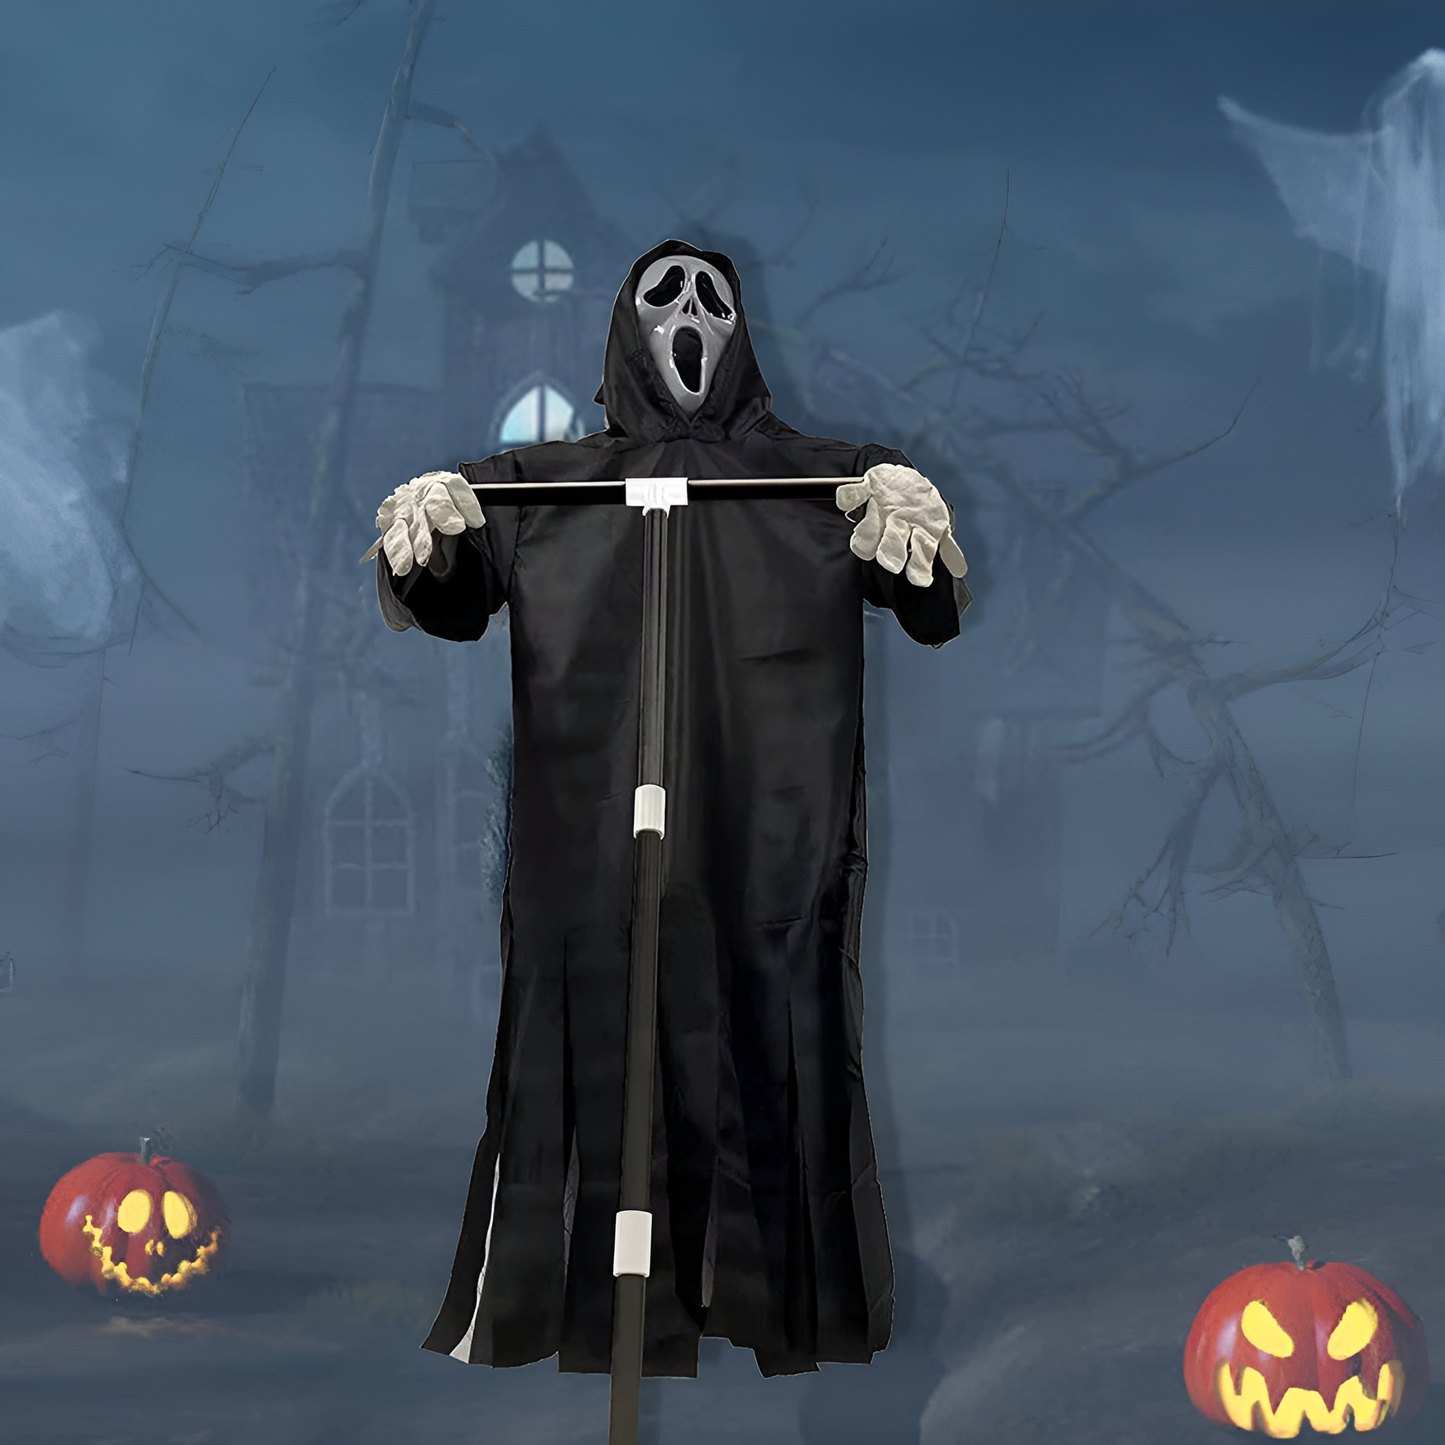 Screamcrow® - Hold nabolaget ditt skummelt under Halloween